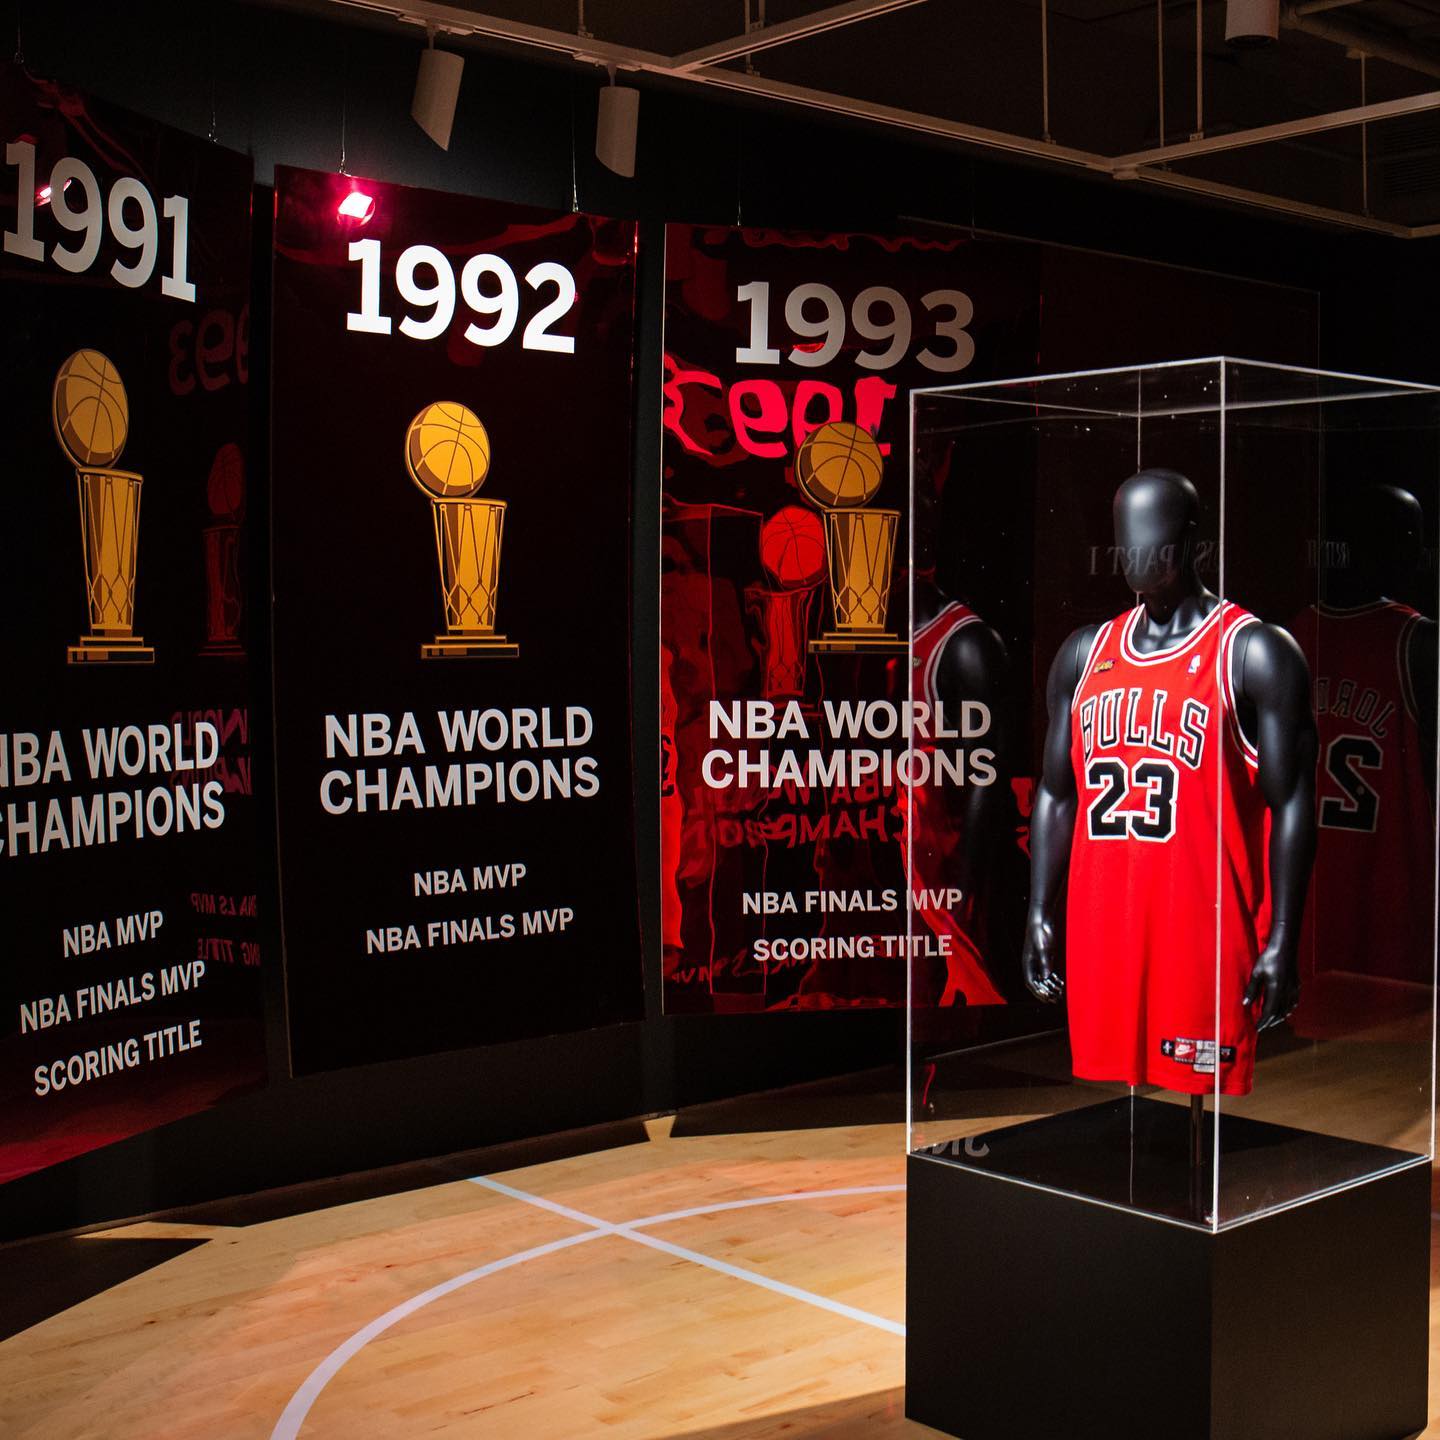 Michael Jordan 'Last Dance' Jersey Sells for Record $10.1 Million